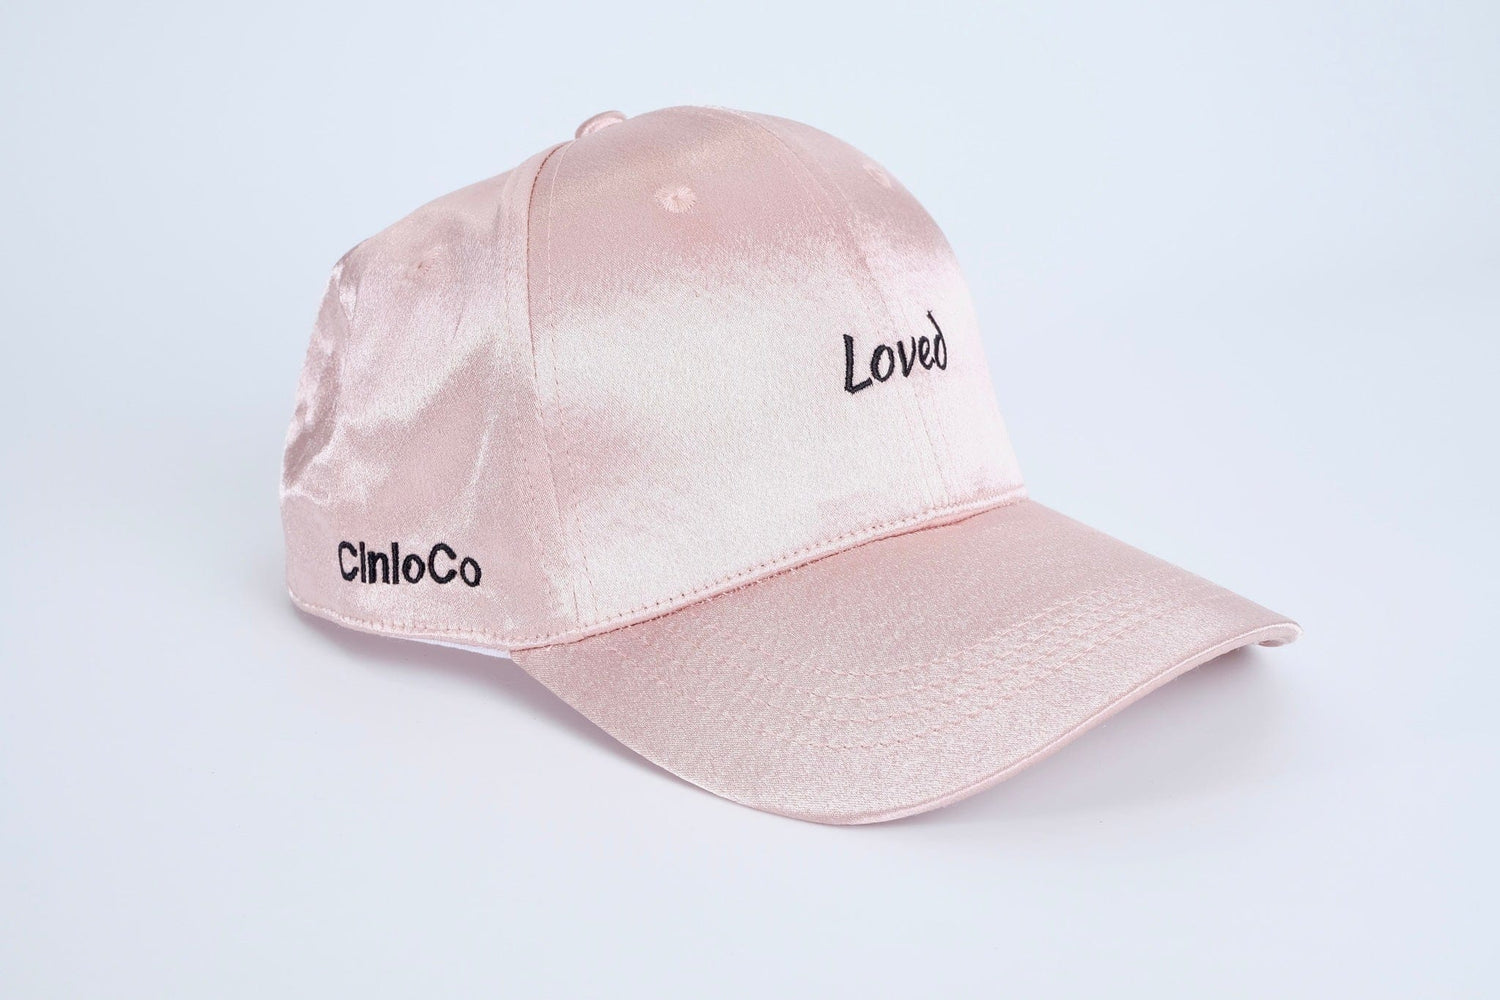 Loved Hat - CinloCo